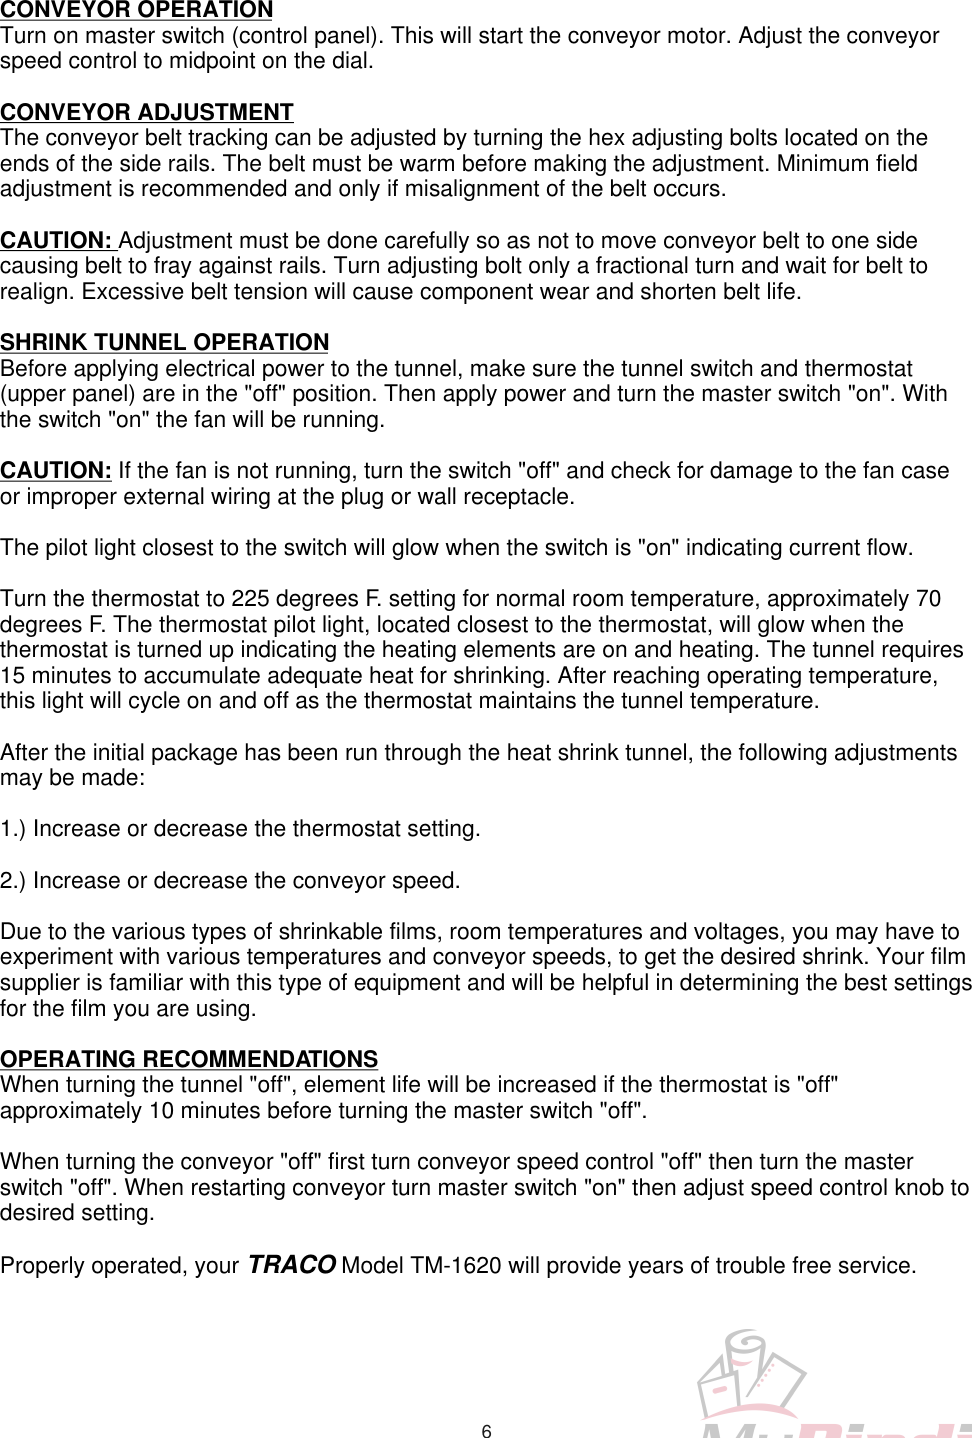 Page 8 of 10 - MyBinding Traco-Tm1620-Manual User Manual